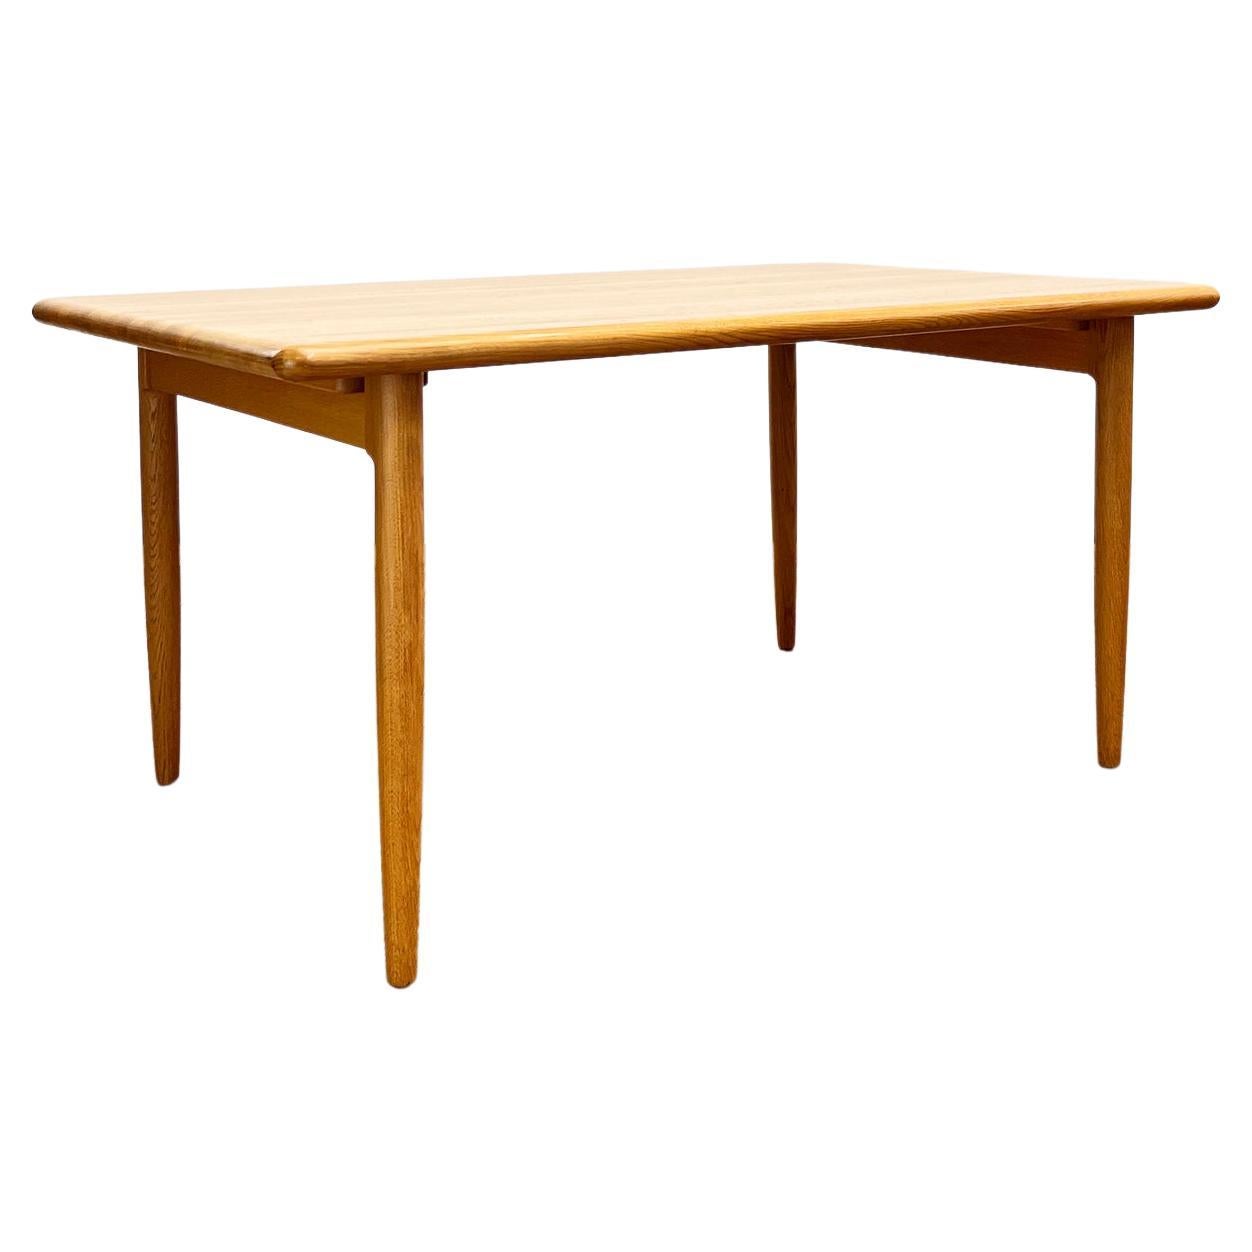 Mid-Century Dining Table, Danish Design out of massiv Oak Wood, Denmark, 1960s For Sale